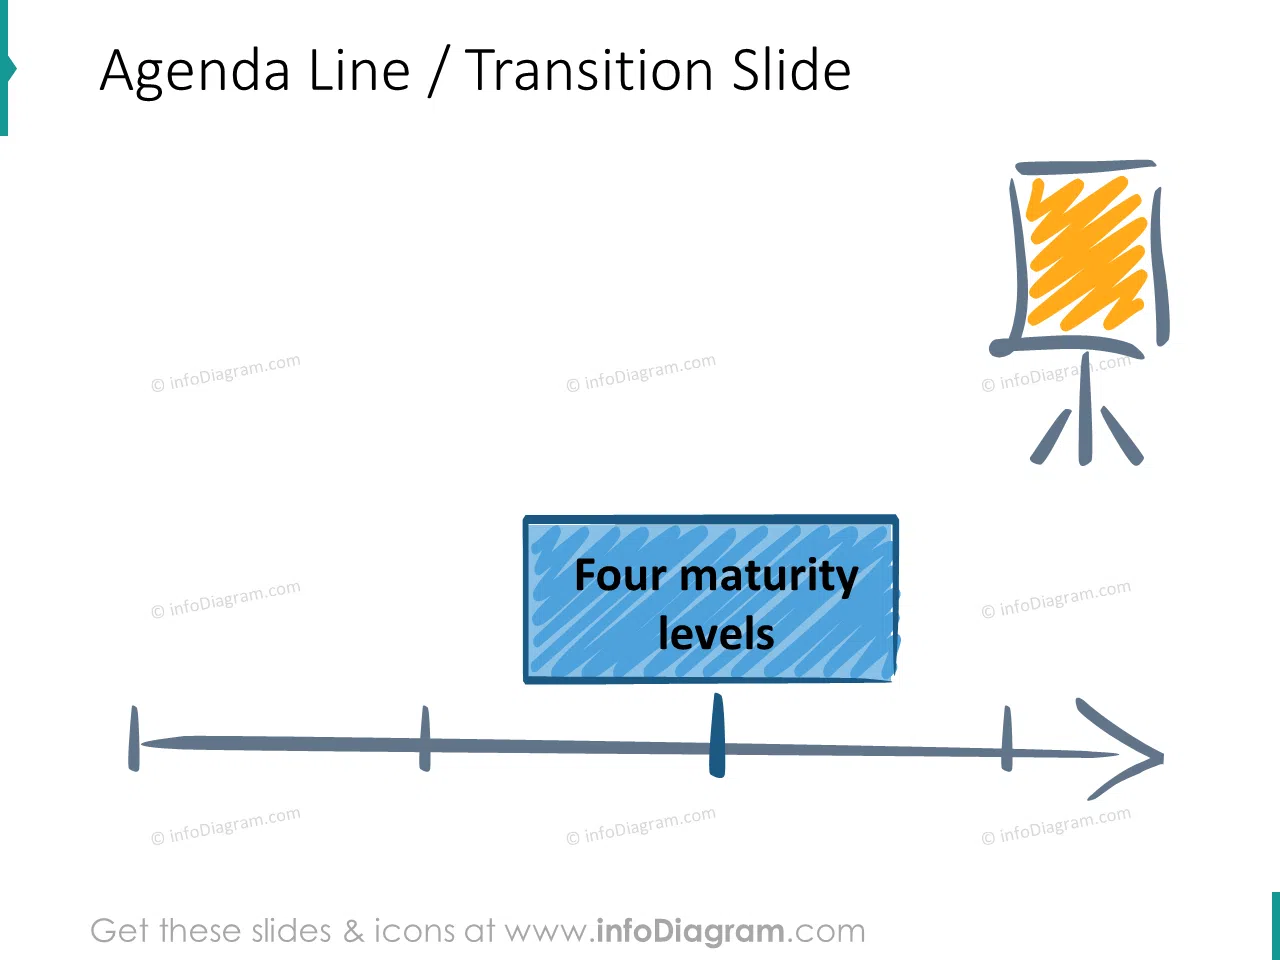 motivation training agenda transition slide 4maturity icons ppt clipart